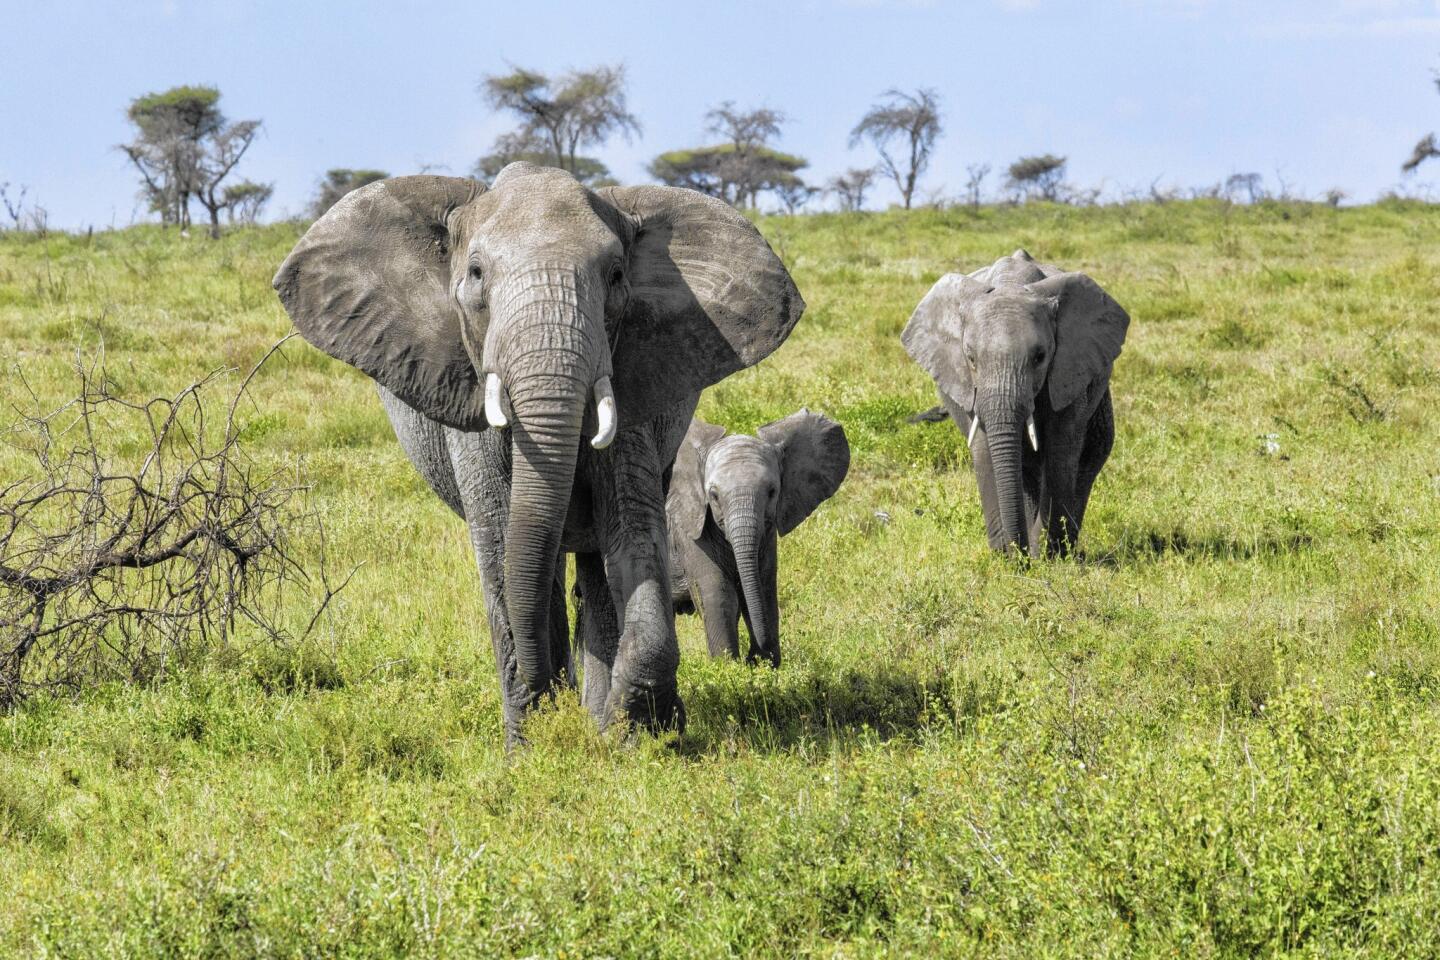 The elephant contingent